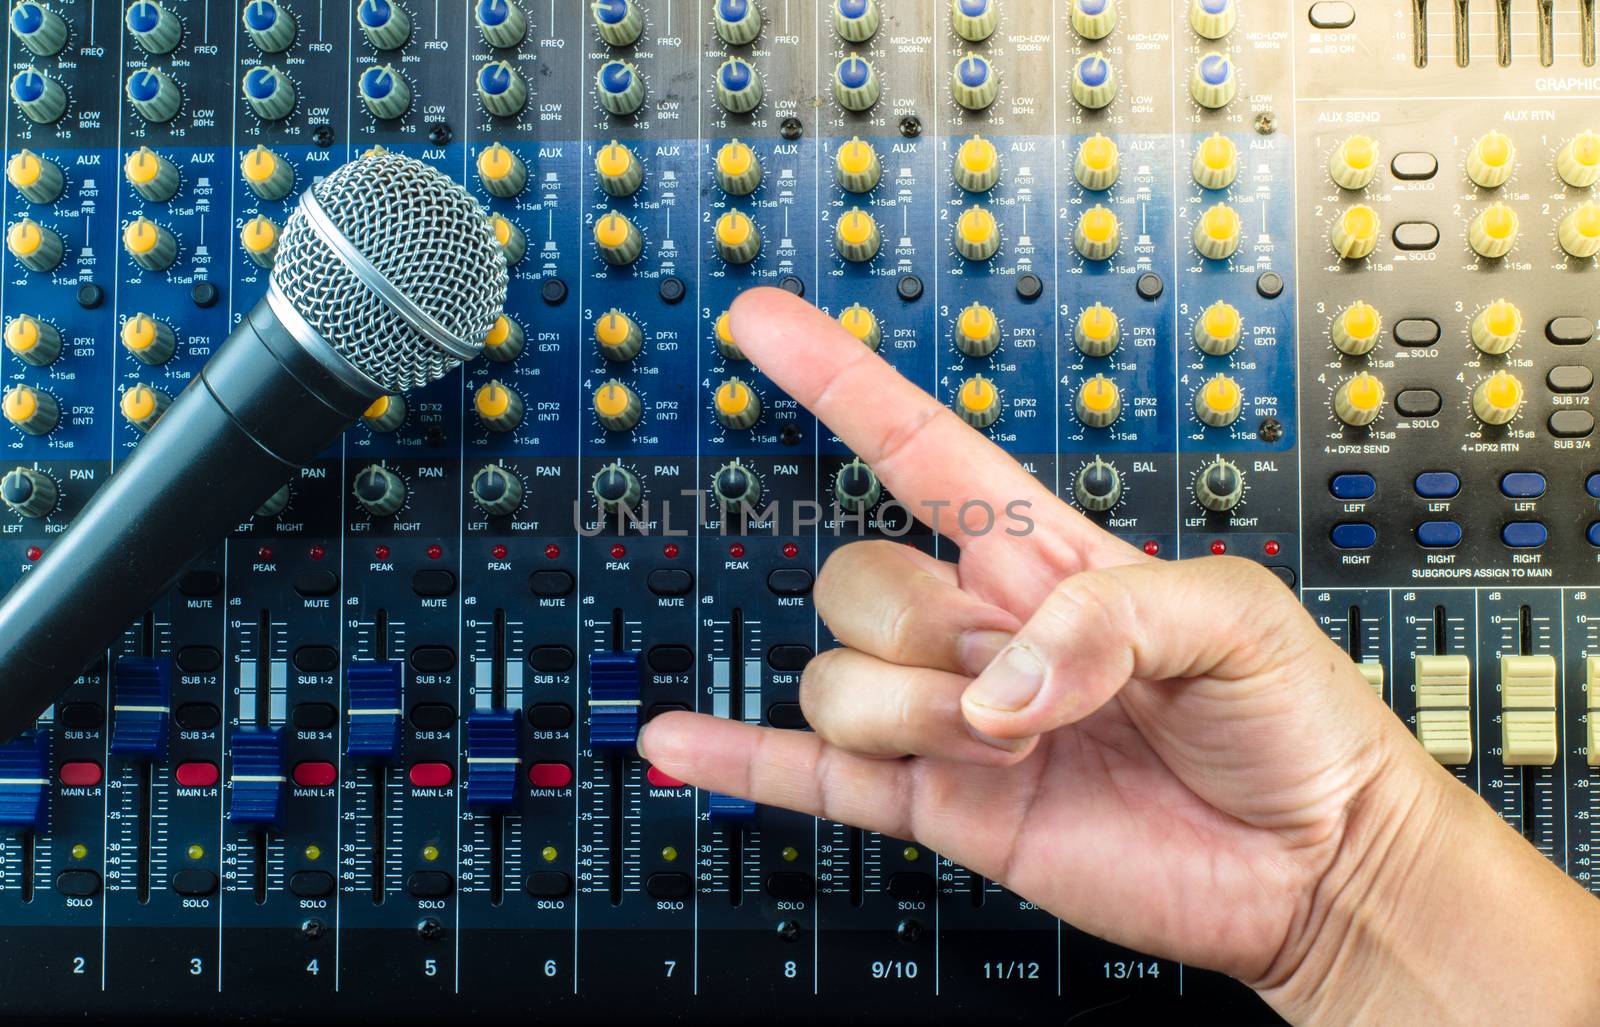 Live Sound Mixers  and music studio Hand symbol